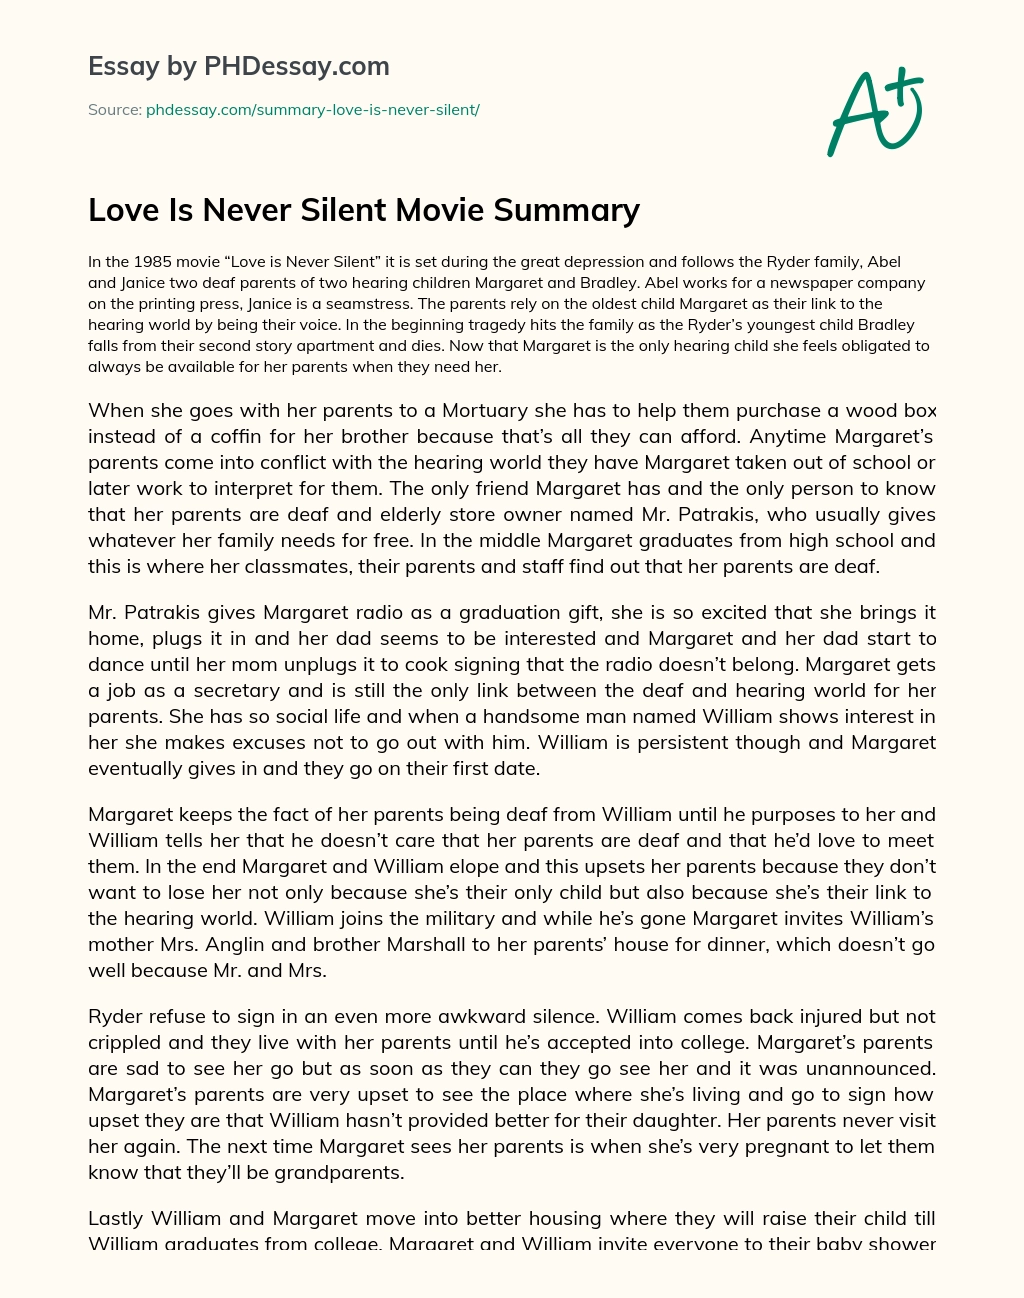 Love Is Never Silent Movie Summary essay